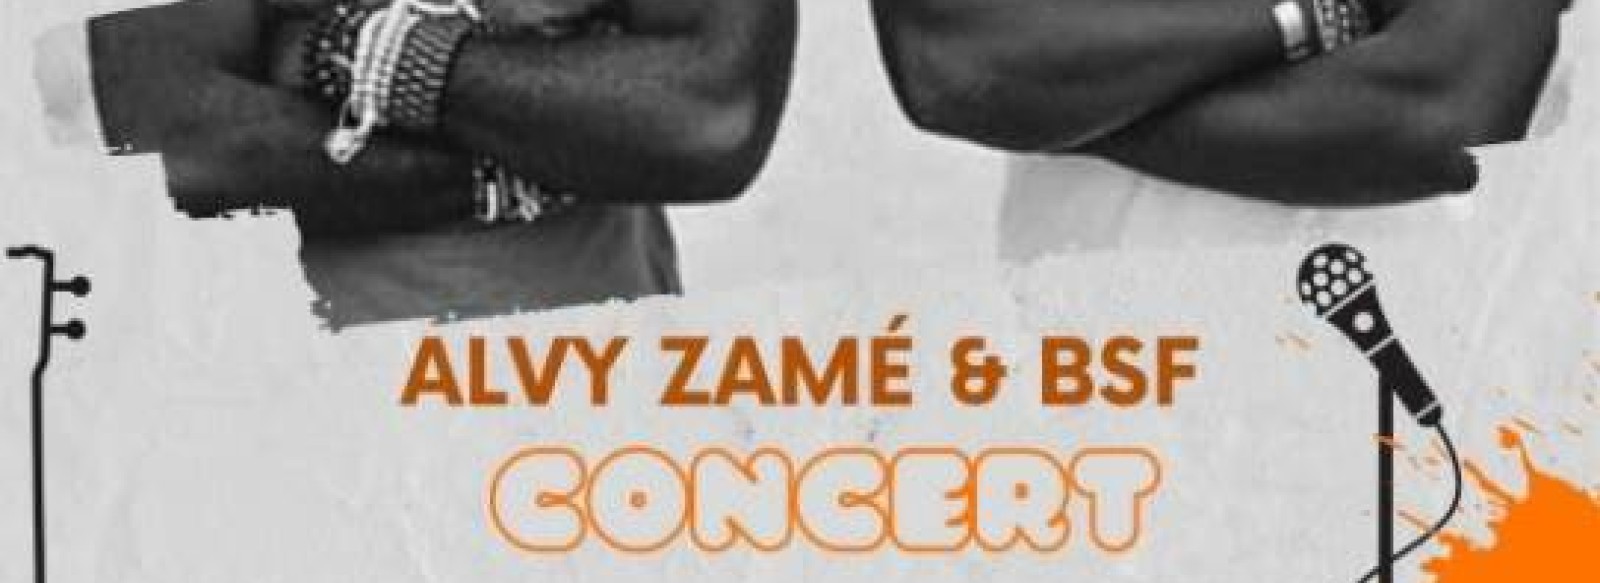 Concert Alvy Zame et BSF